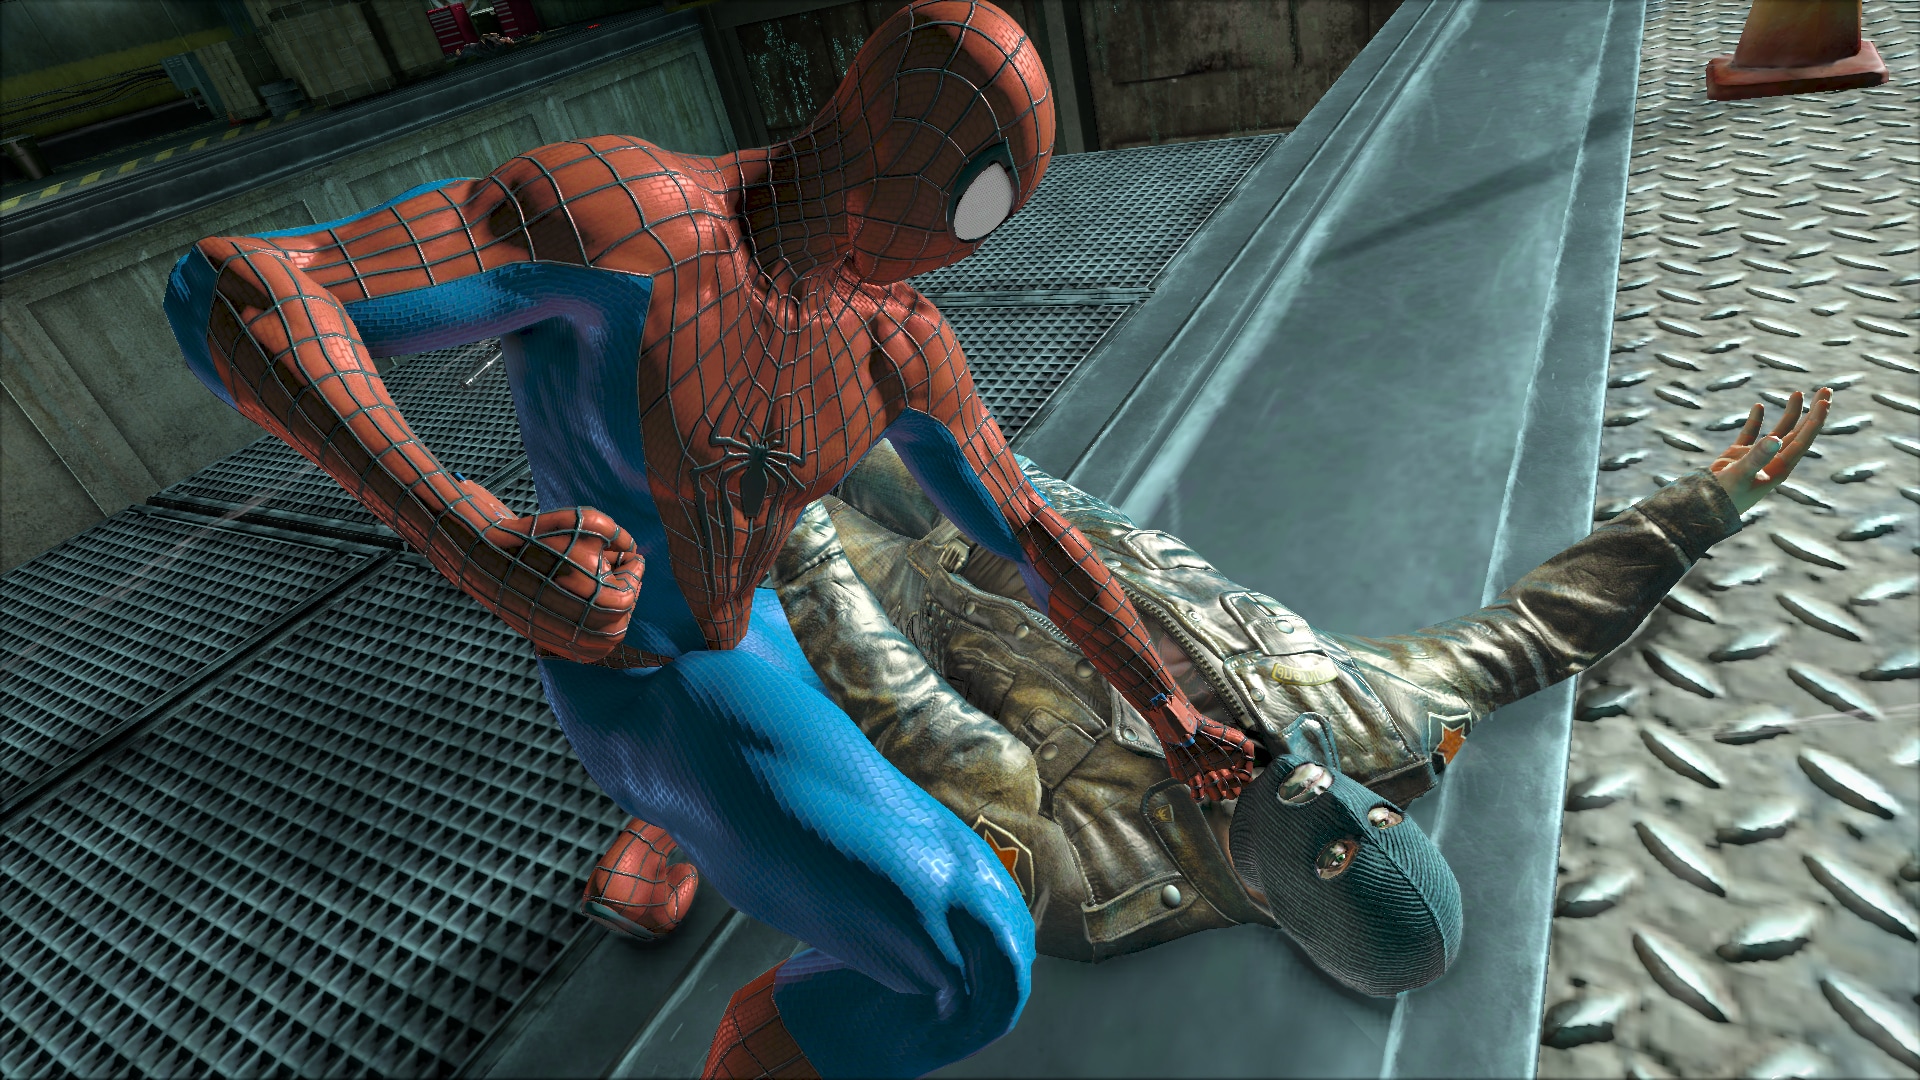 Игры человек 2015. The amazing Spider-man (игра, 2012). The amazing Spider-man 2 игра. Spider man 2014 игра. Амазинг Спайдермен 2 игра.